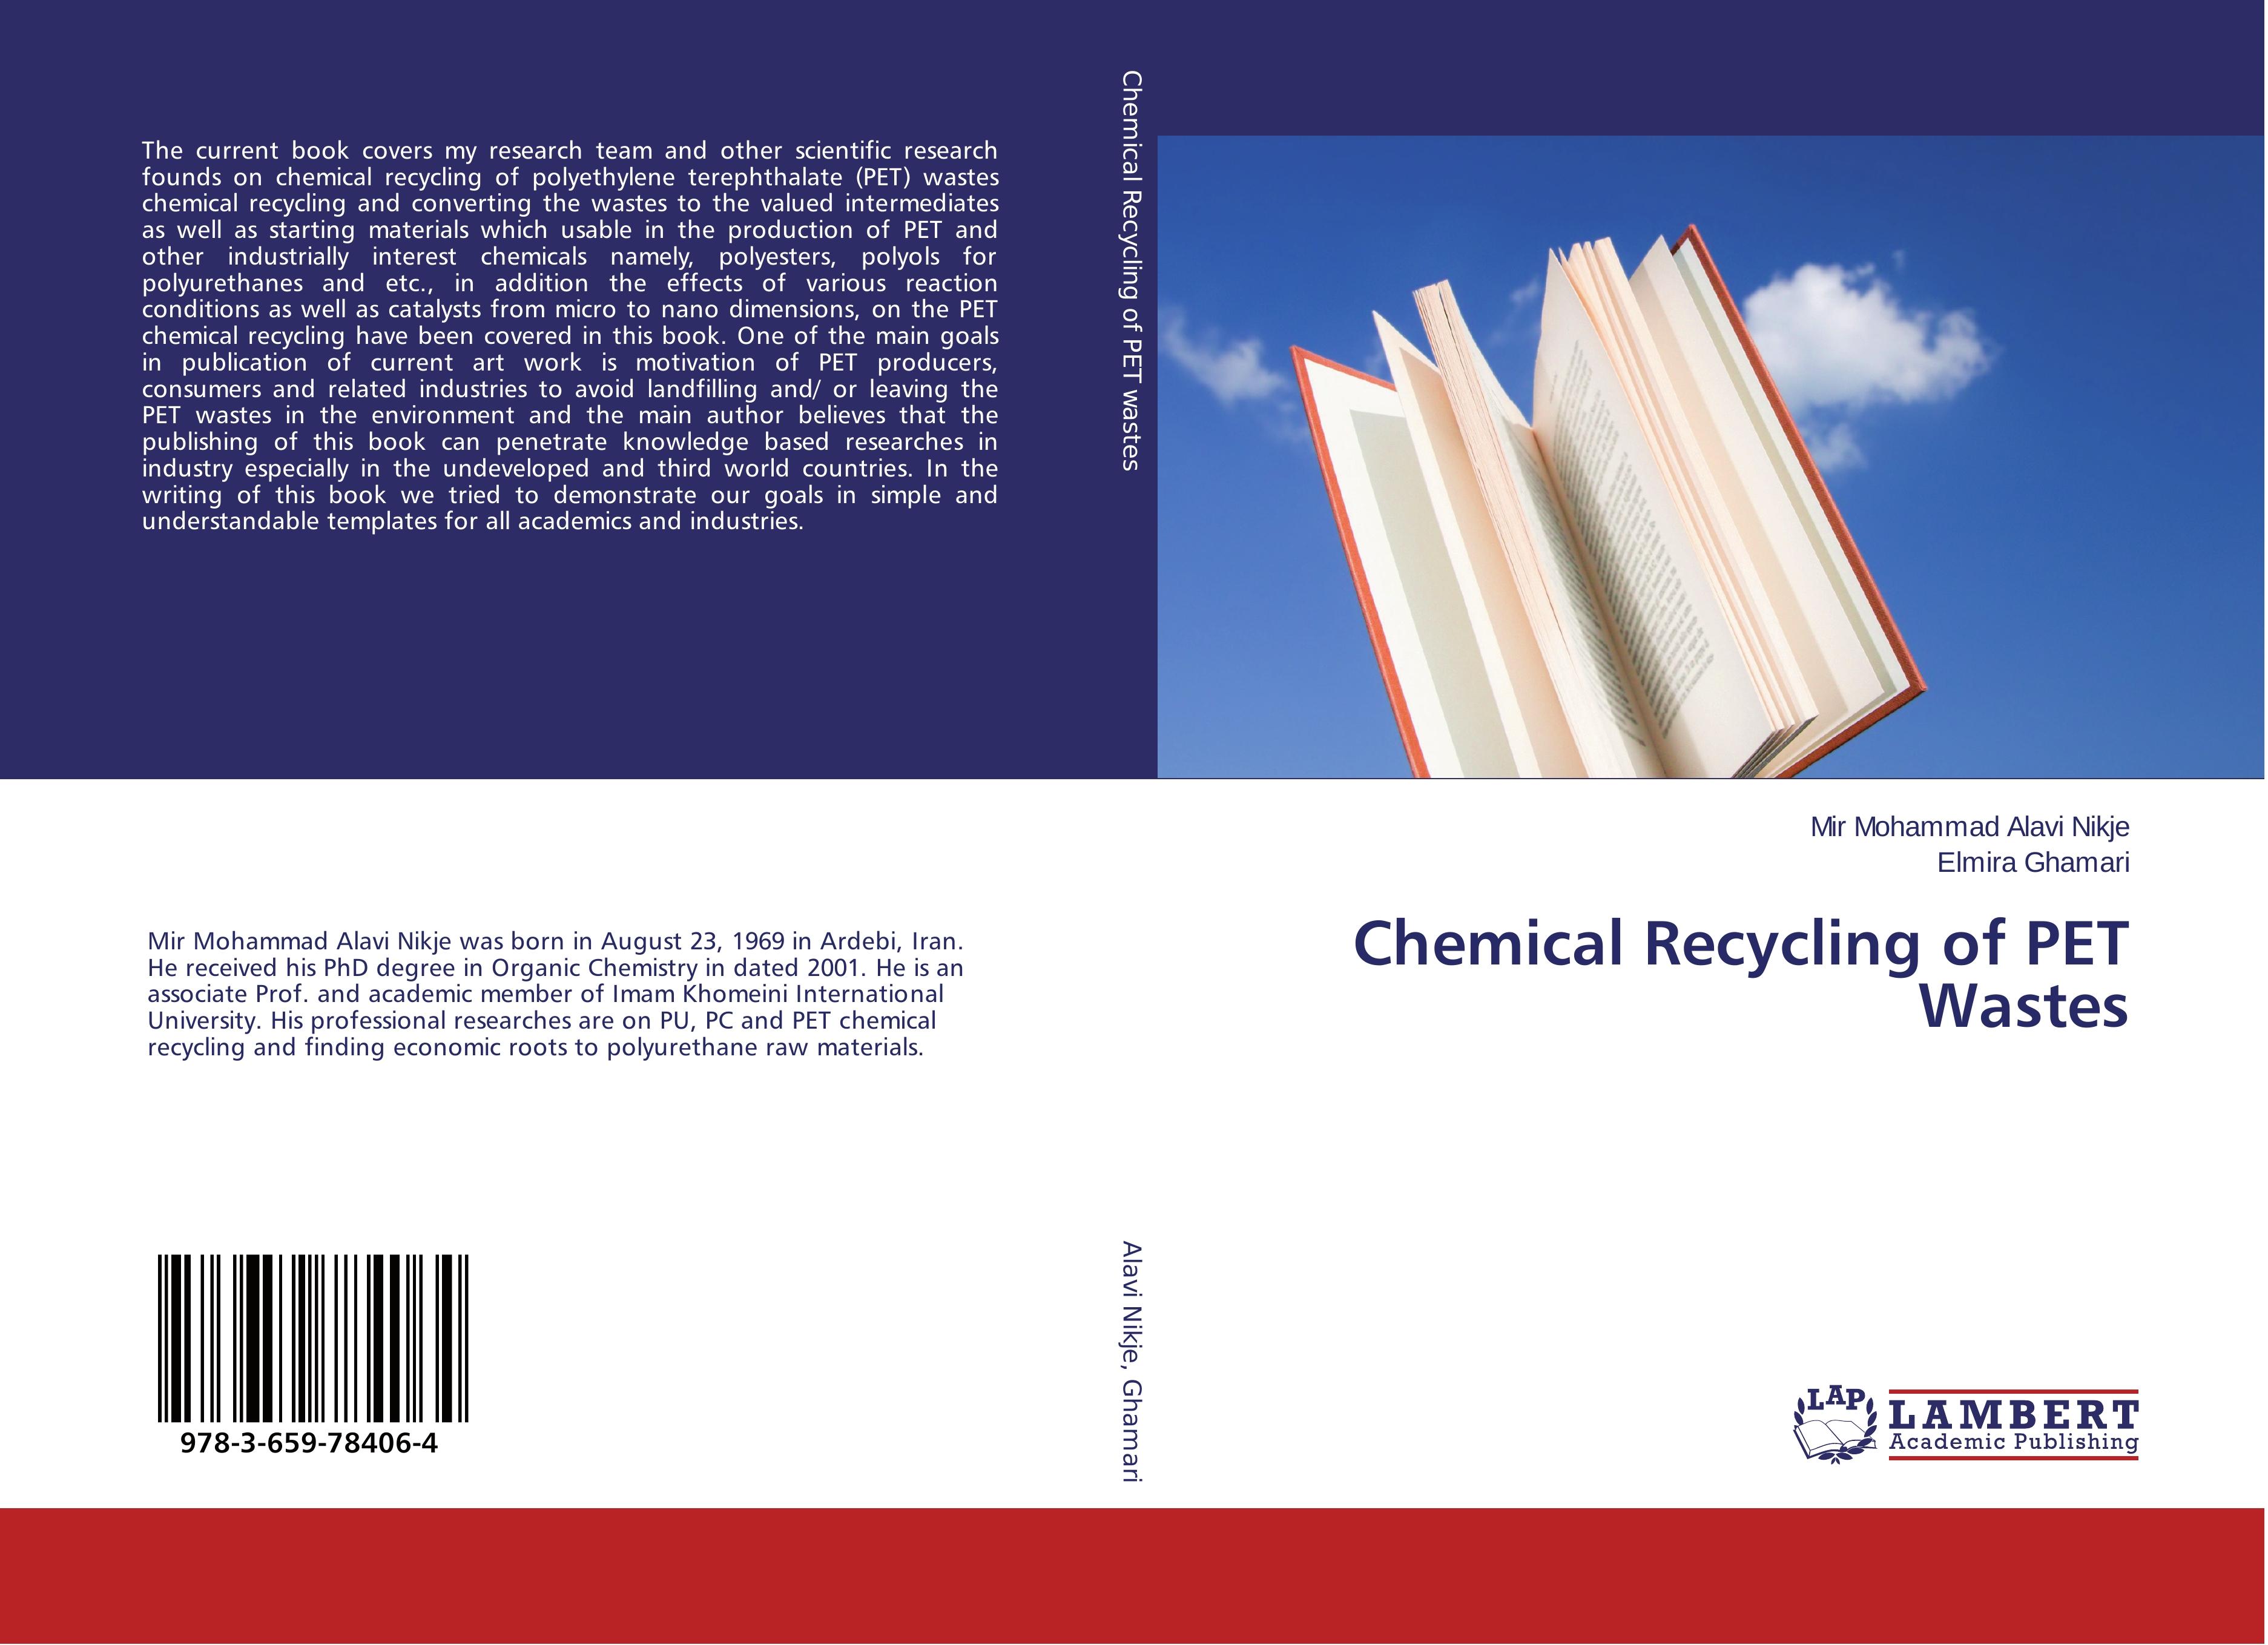 Chemical Recycling of PET Wastes - Mir Mohammad Alavi Nikje Elmira Ghamari